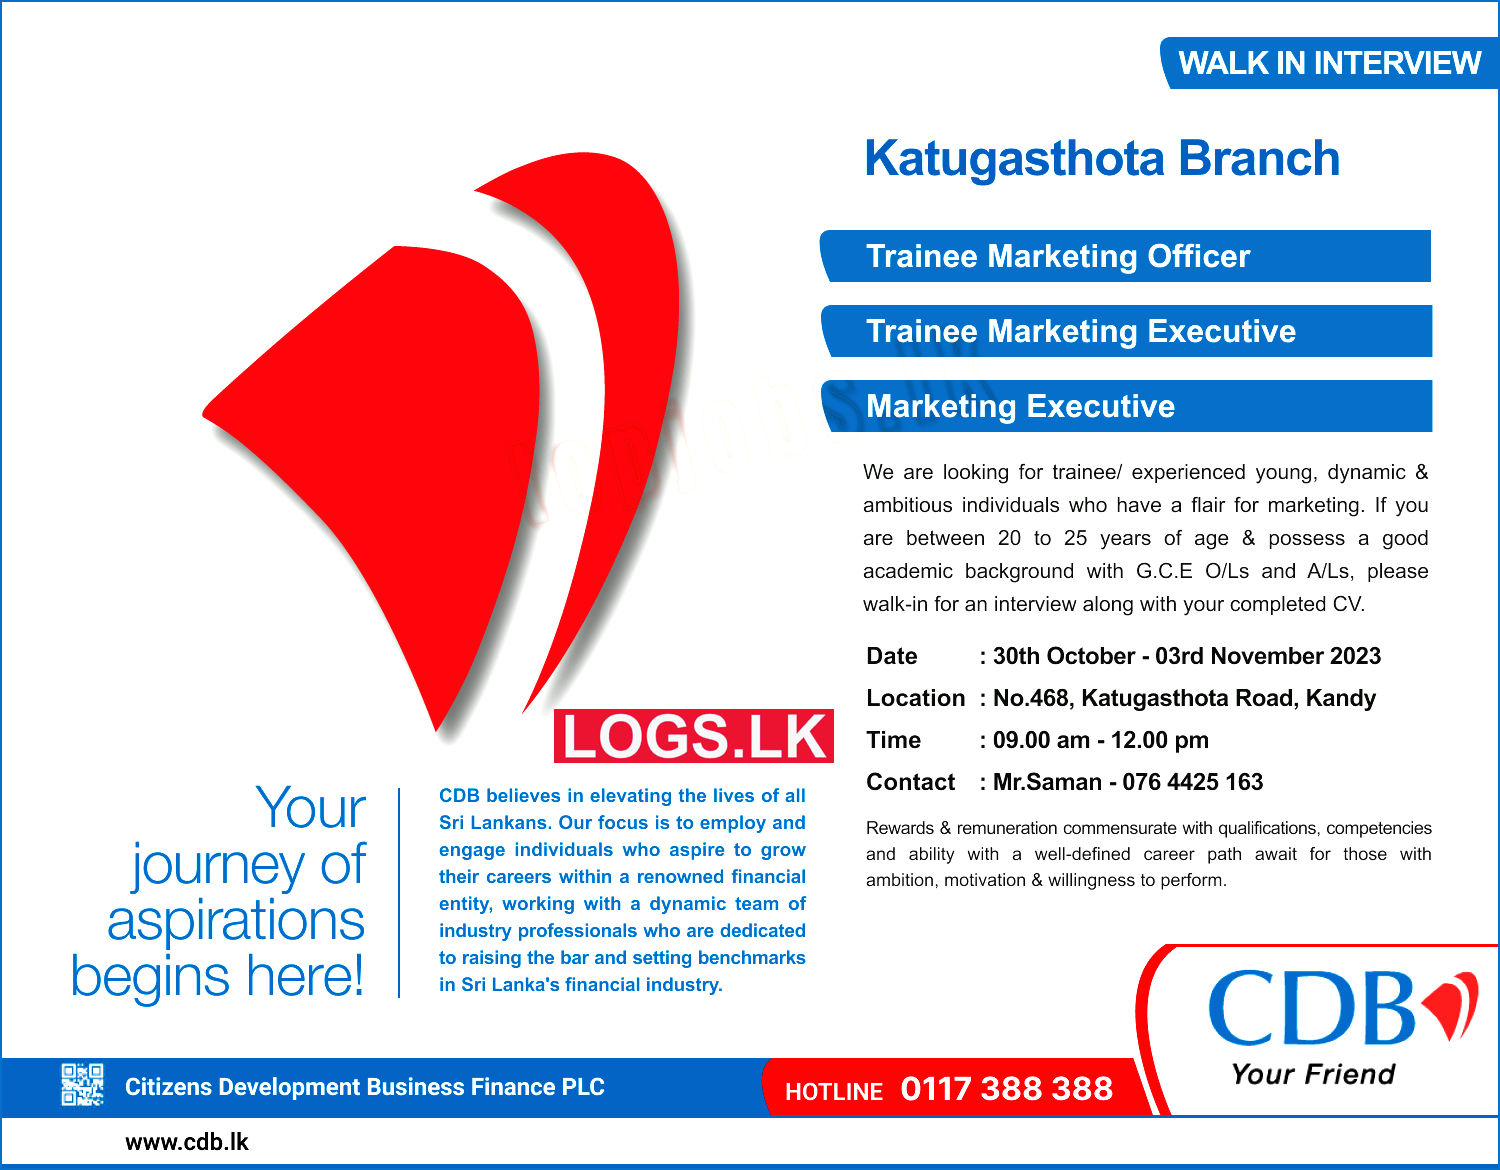 Walk In Interview - Trainee Marketing Officer / Trainee Marketing Executive / Marketing Executive - Katugasthota Vacancies